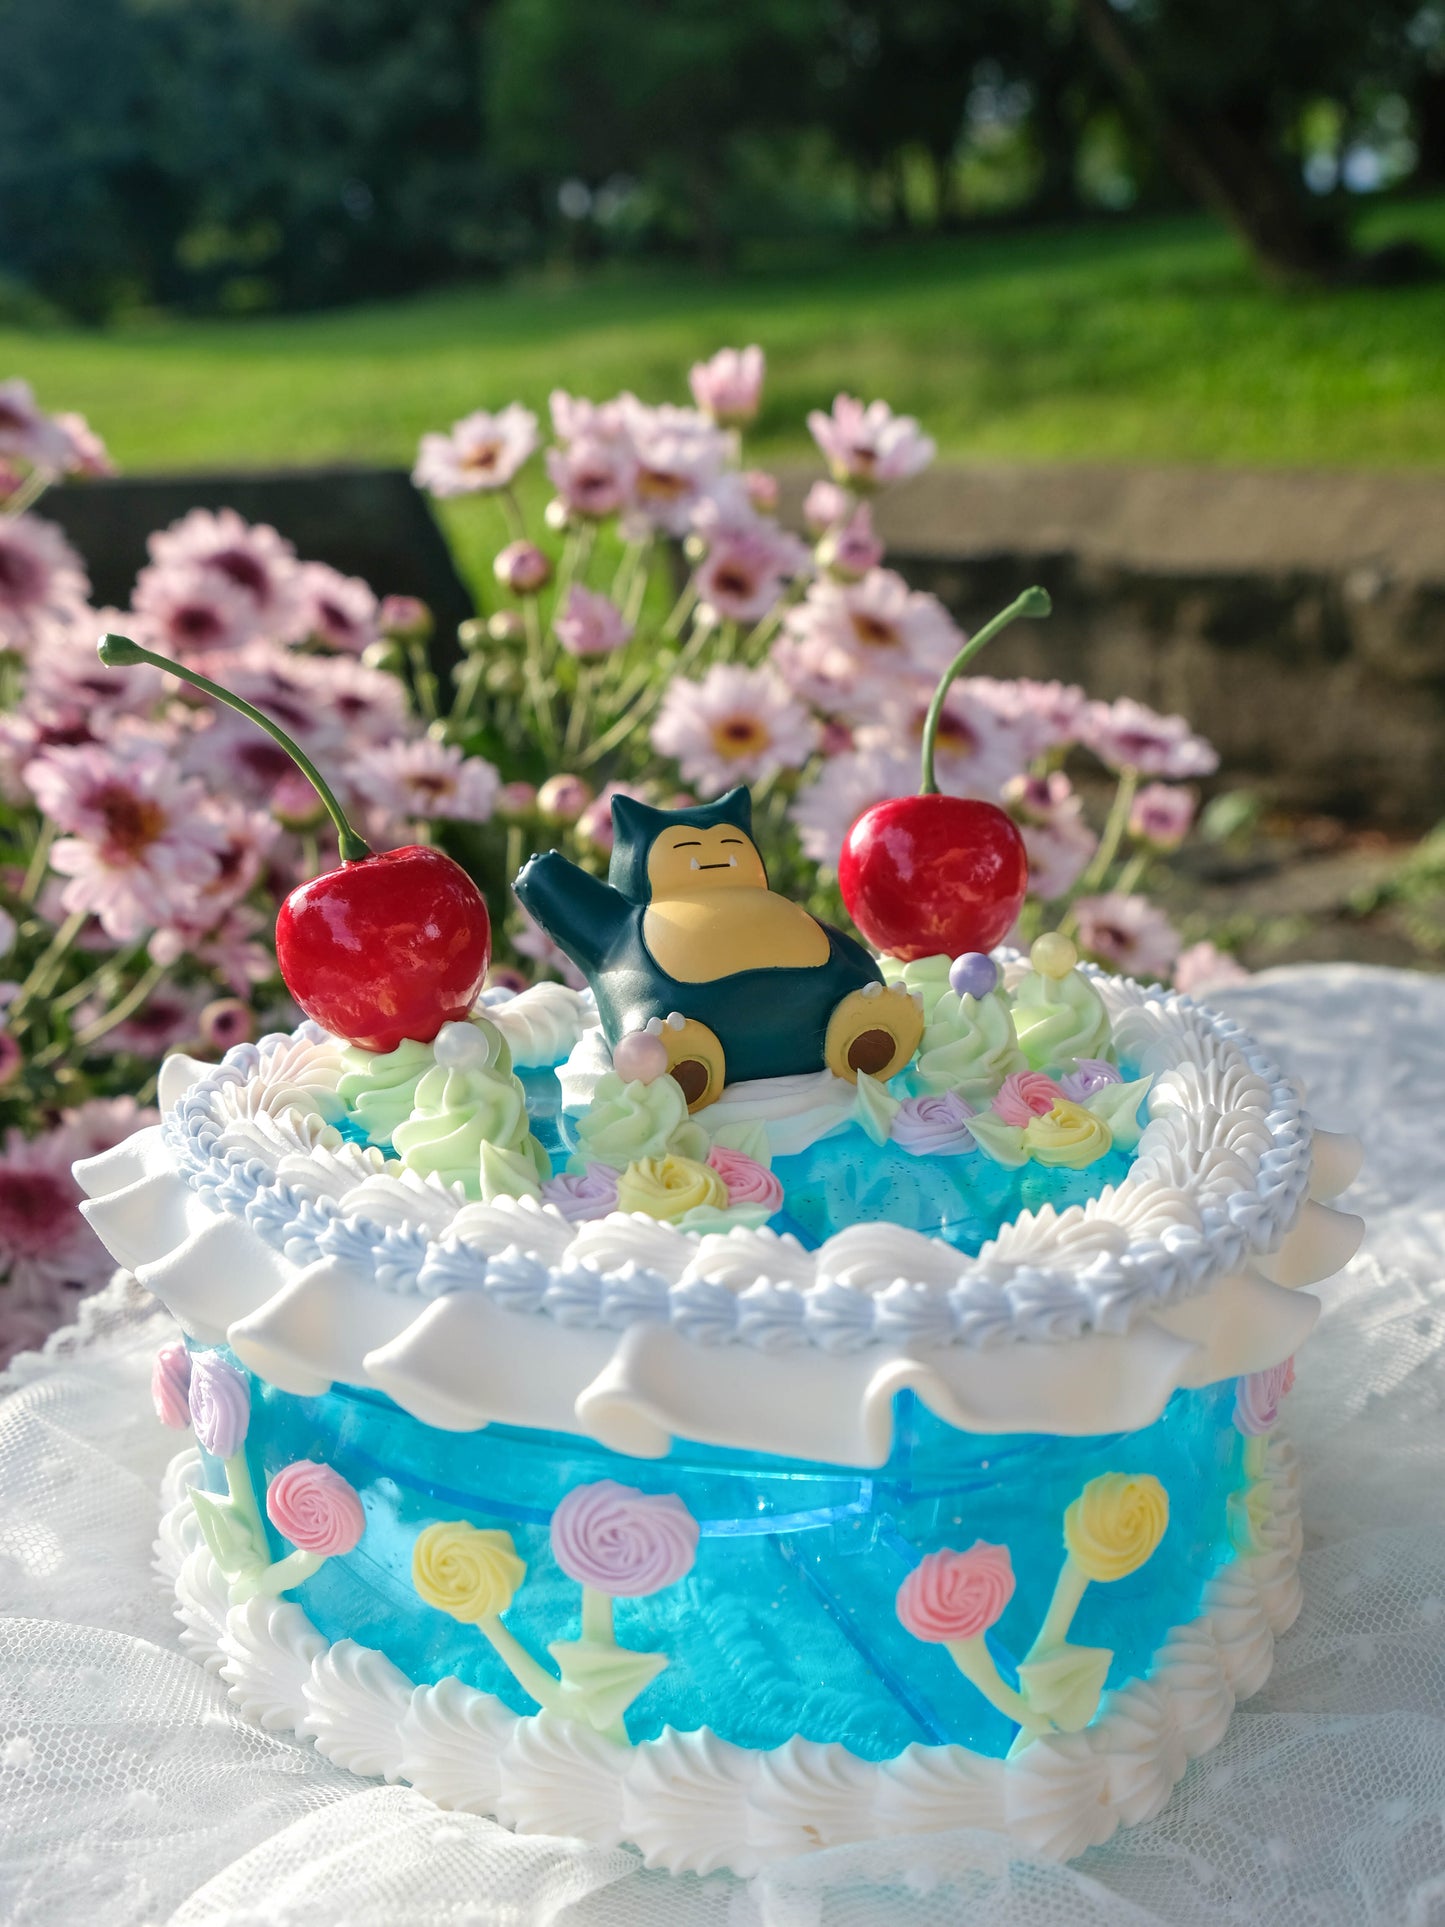 JELLY CAKE - Sleepy Snorlax - Pokemon